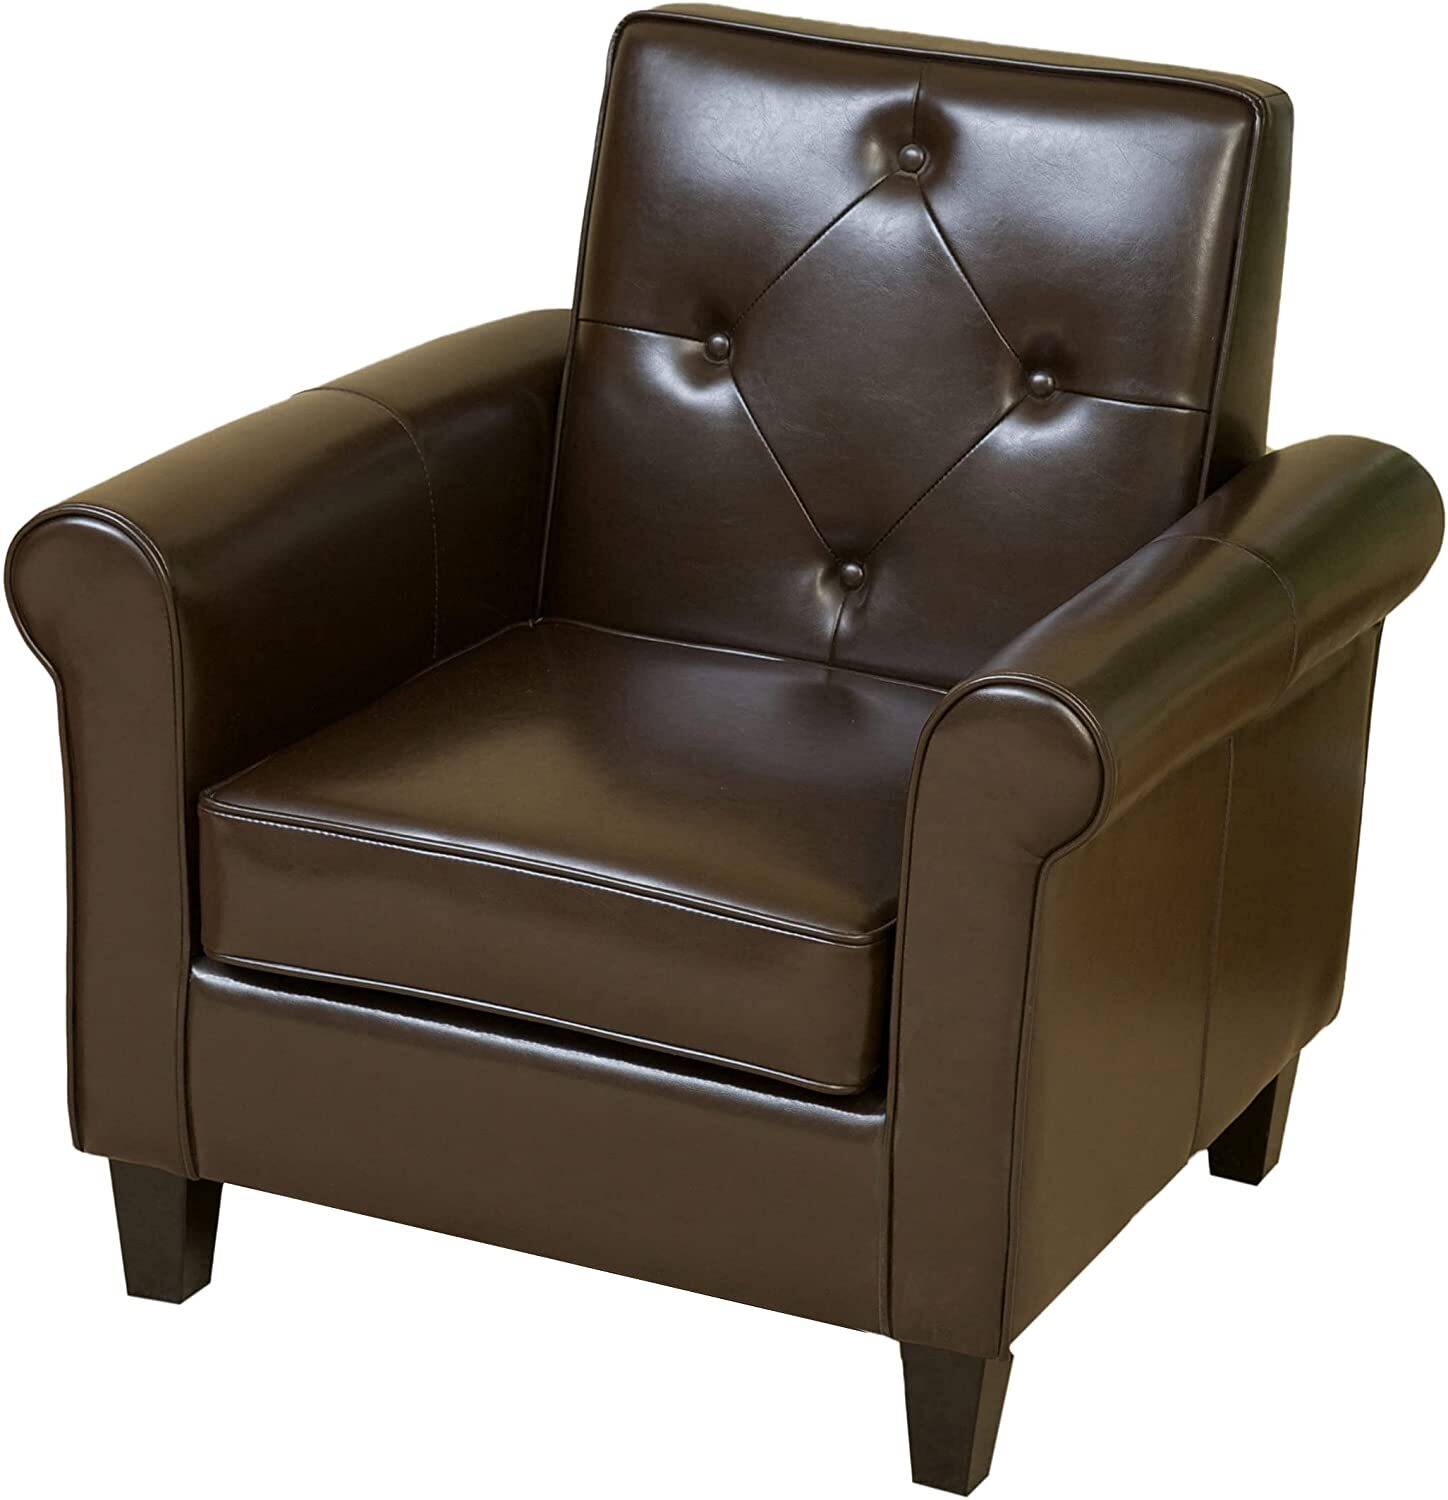 Dark leather cigar chair